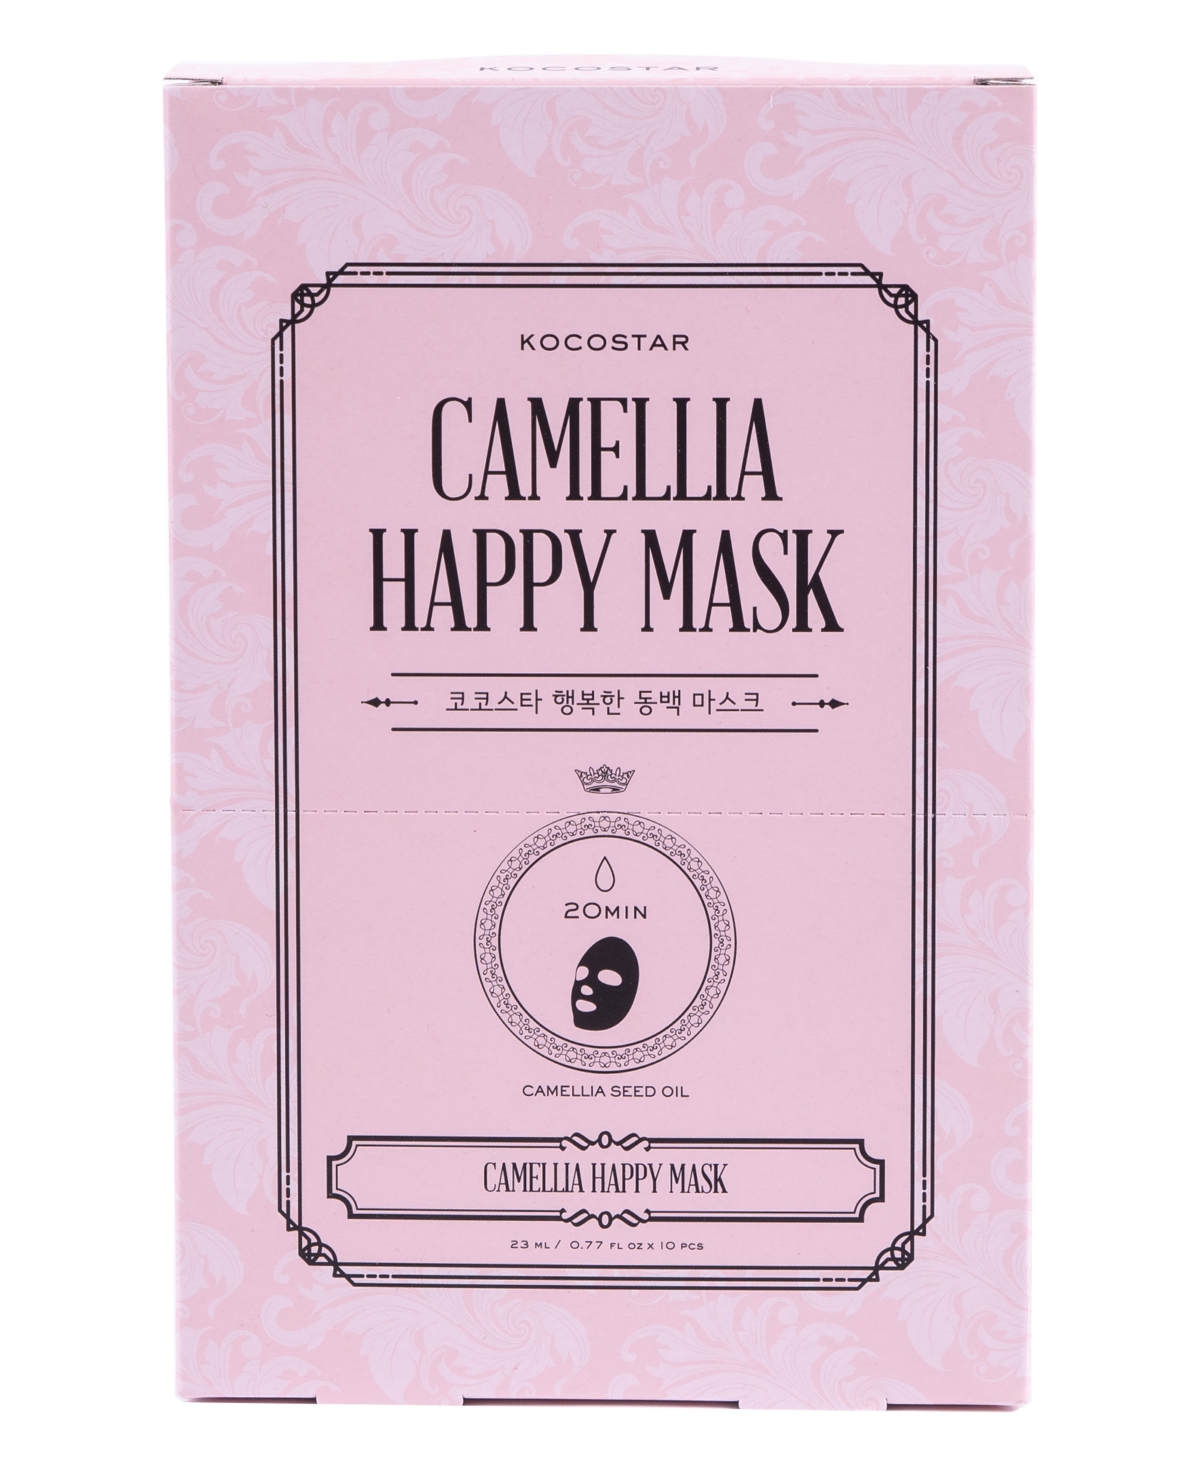 Kocostar Camellia Happy Mask, Pack of 10